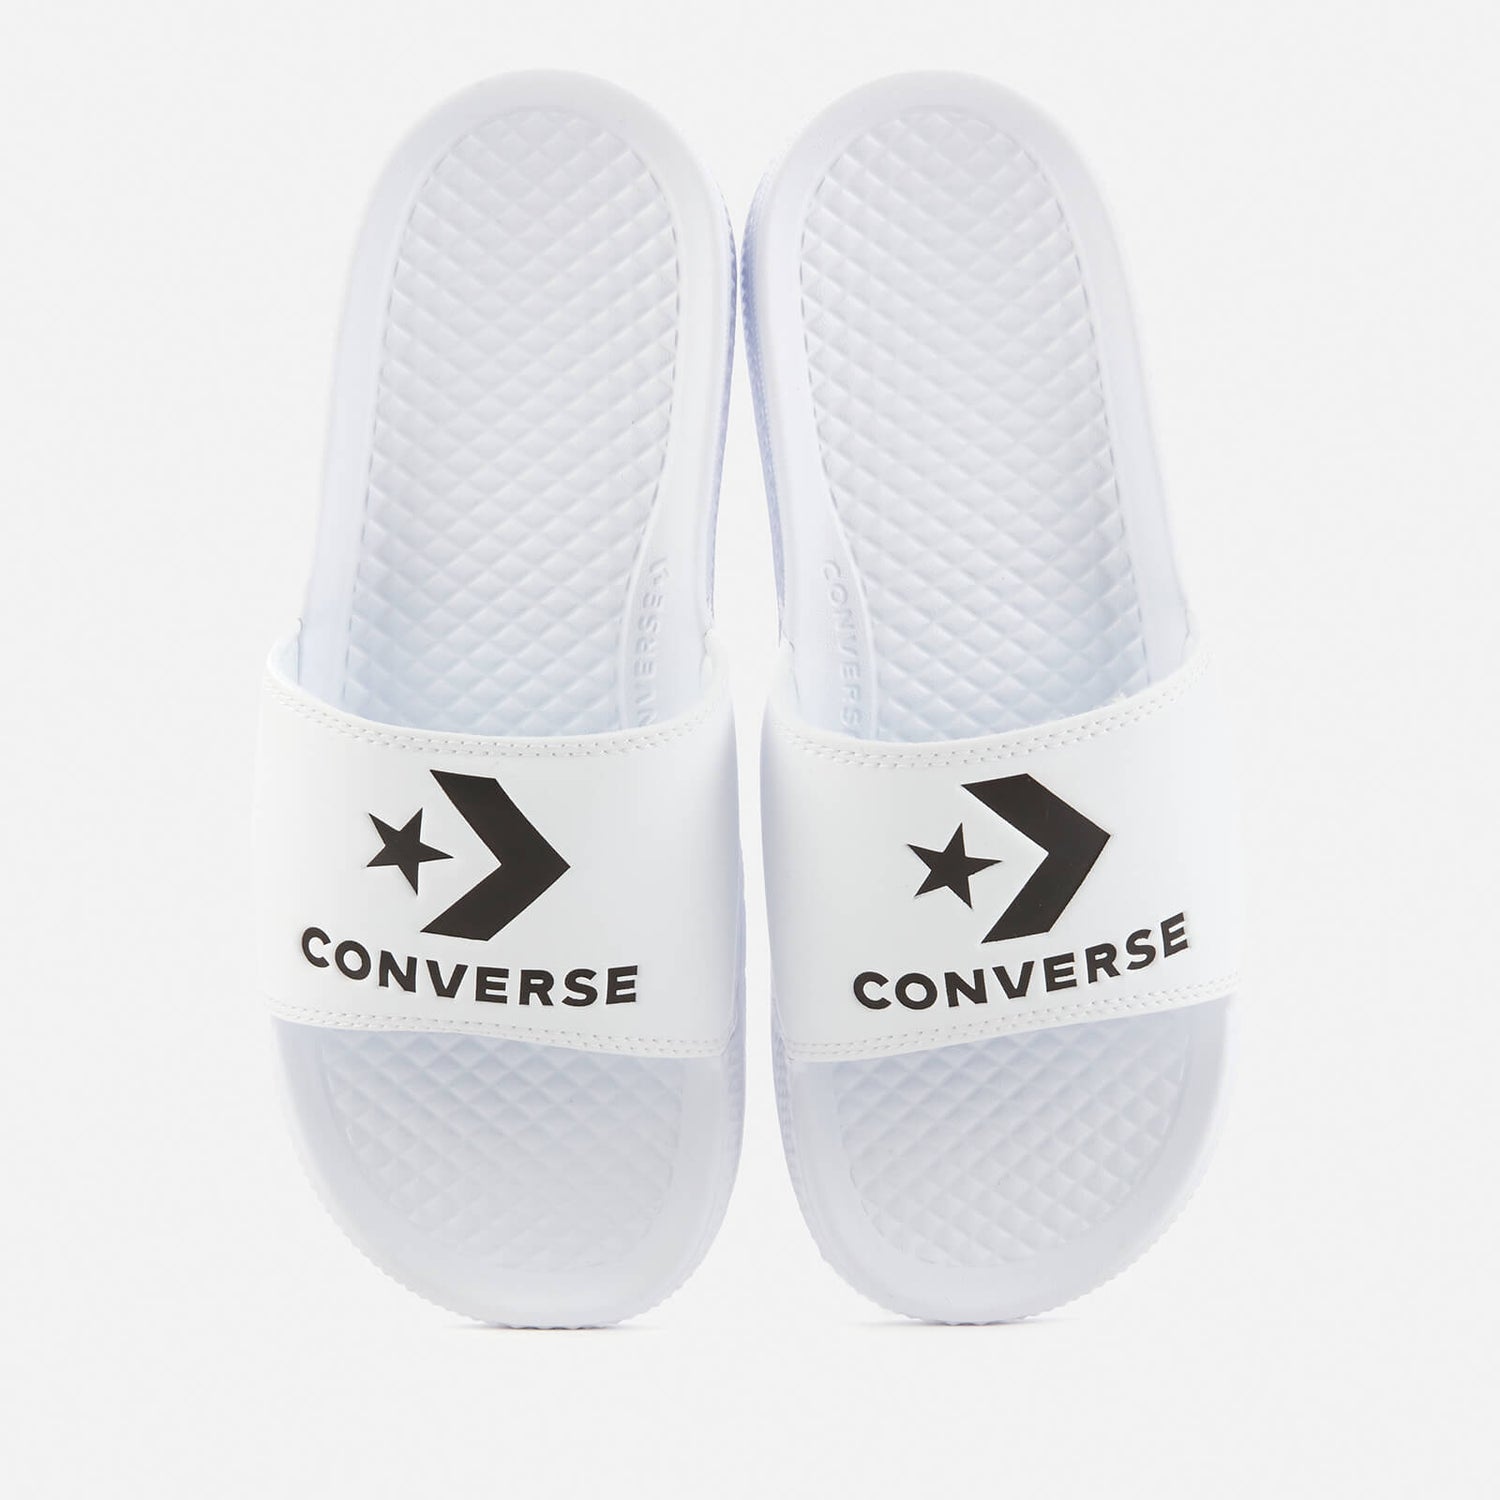 Converse All Star Slide Sandals - White/Black